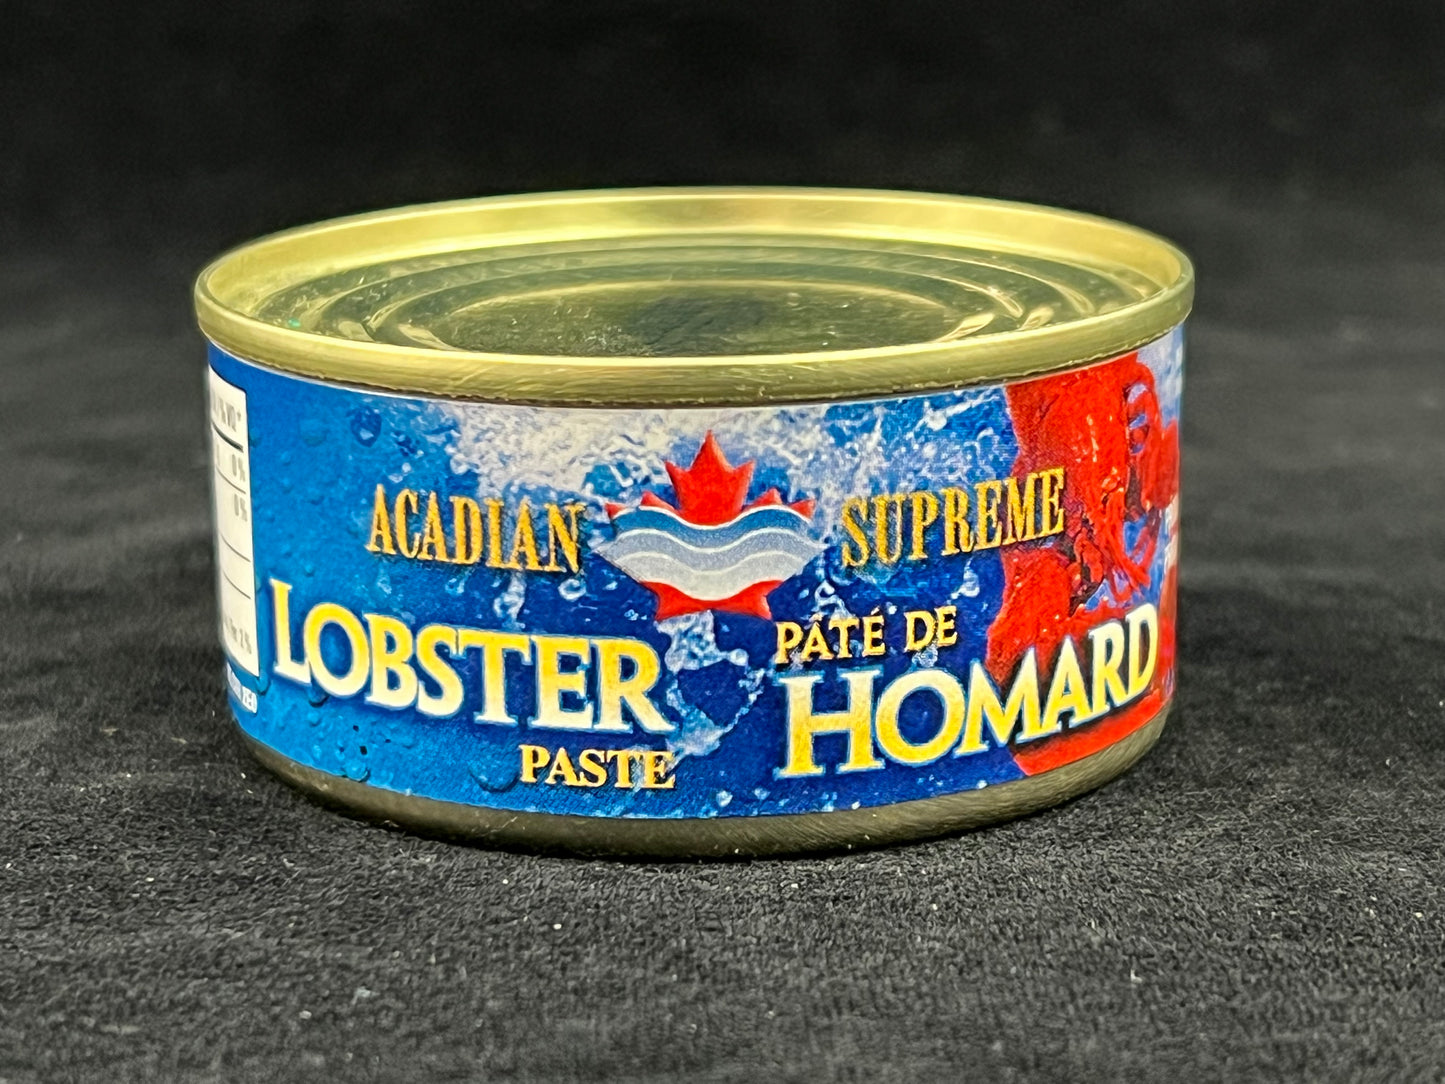 Acadian - Pâté de homard / Lobster Paste